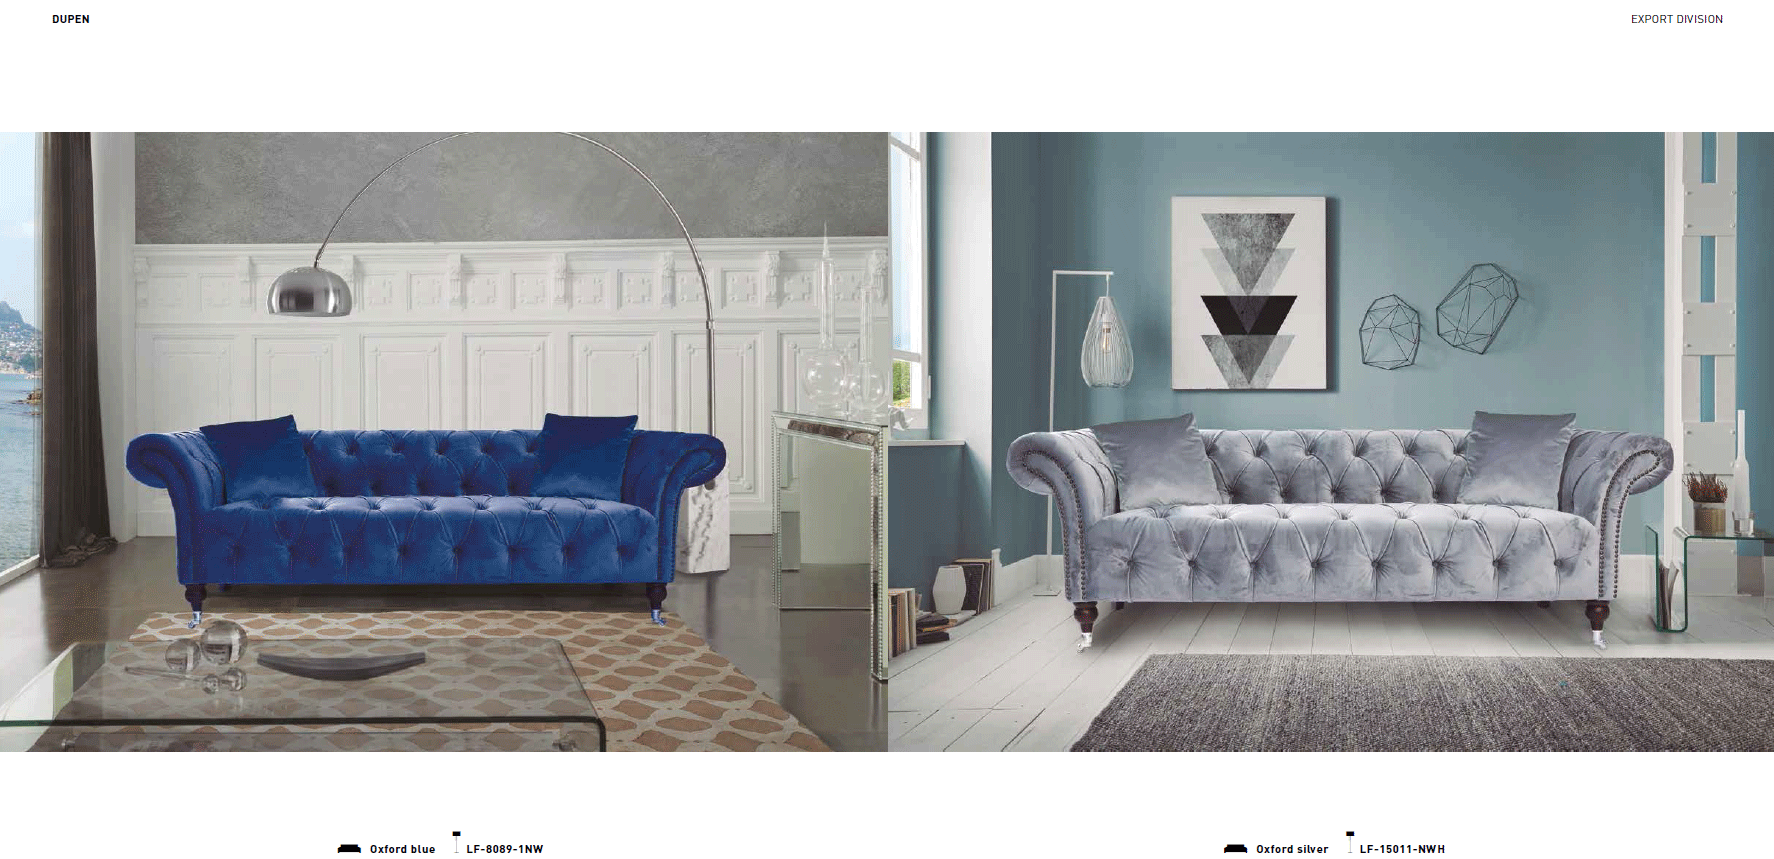 Brands Kuka Home Oxford Sofa, FL-15011-NWH, LF-8089-1NW